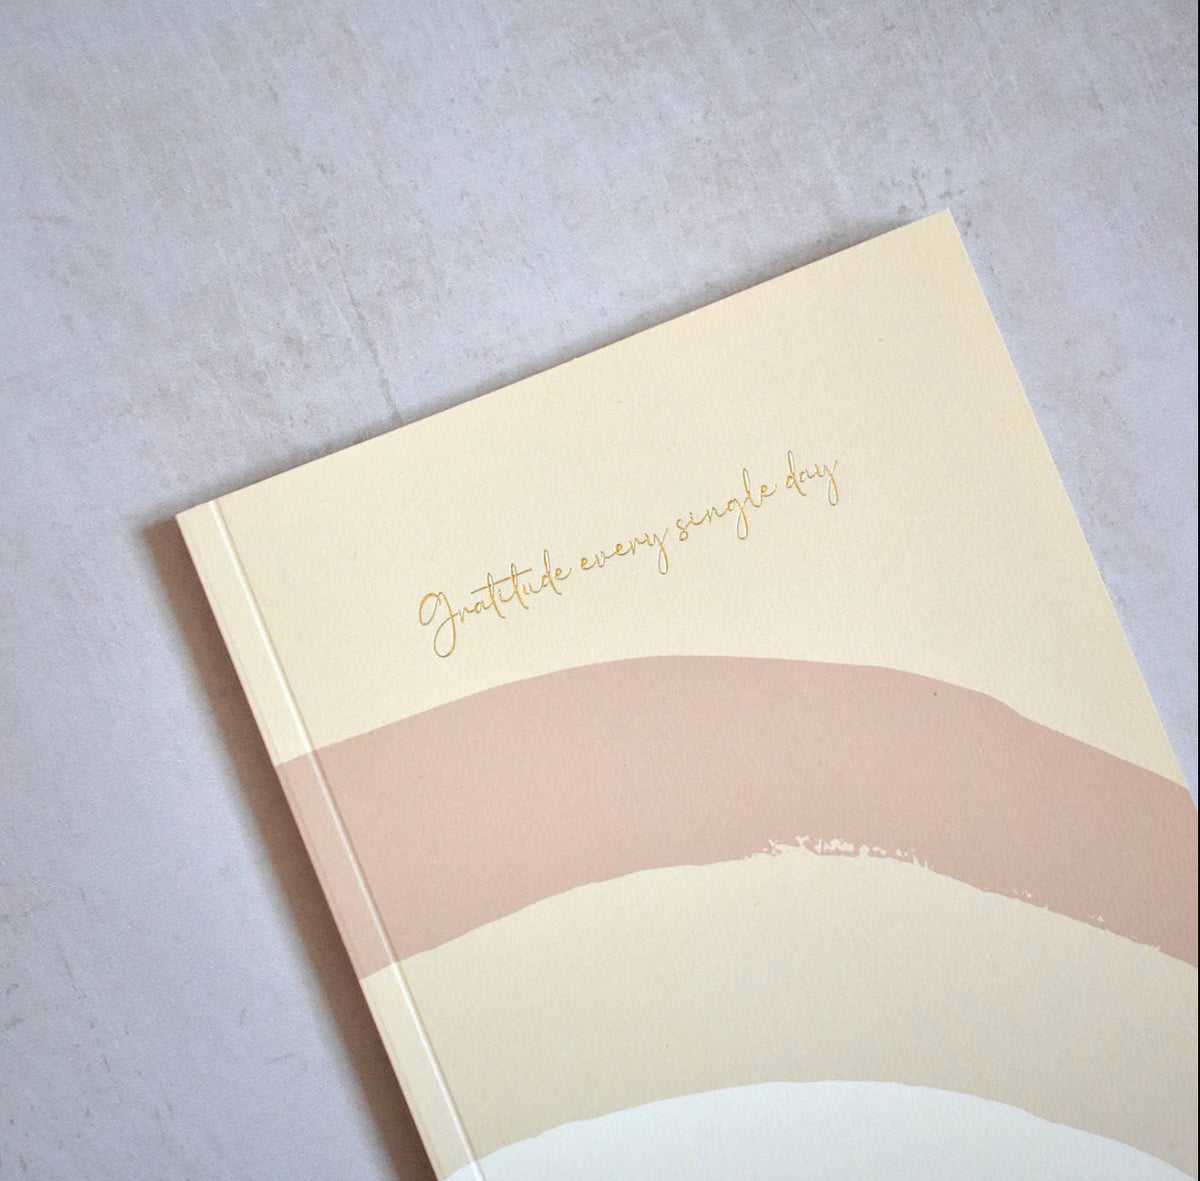 Rainbow Gold Foiled Notebook - Bright Days Ahead